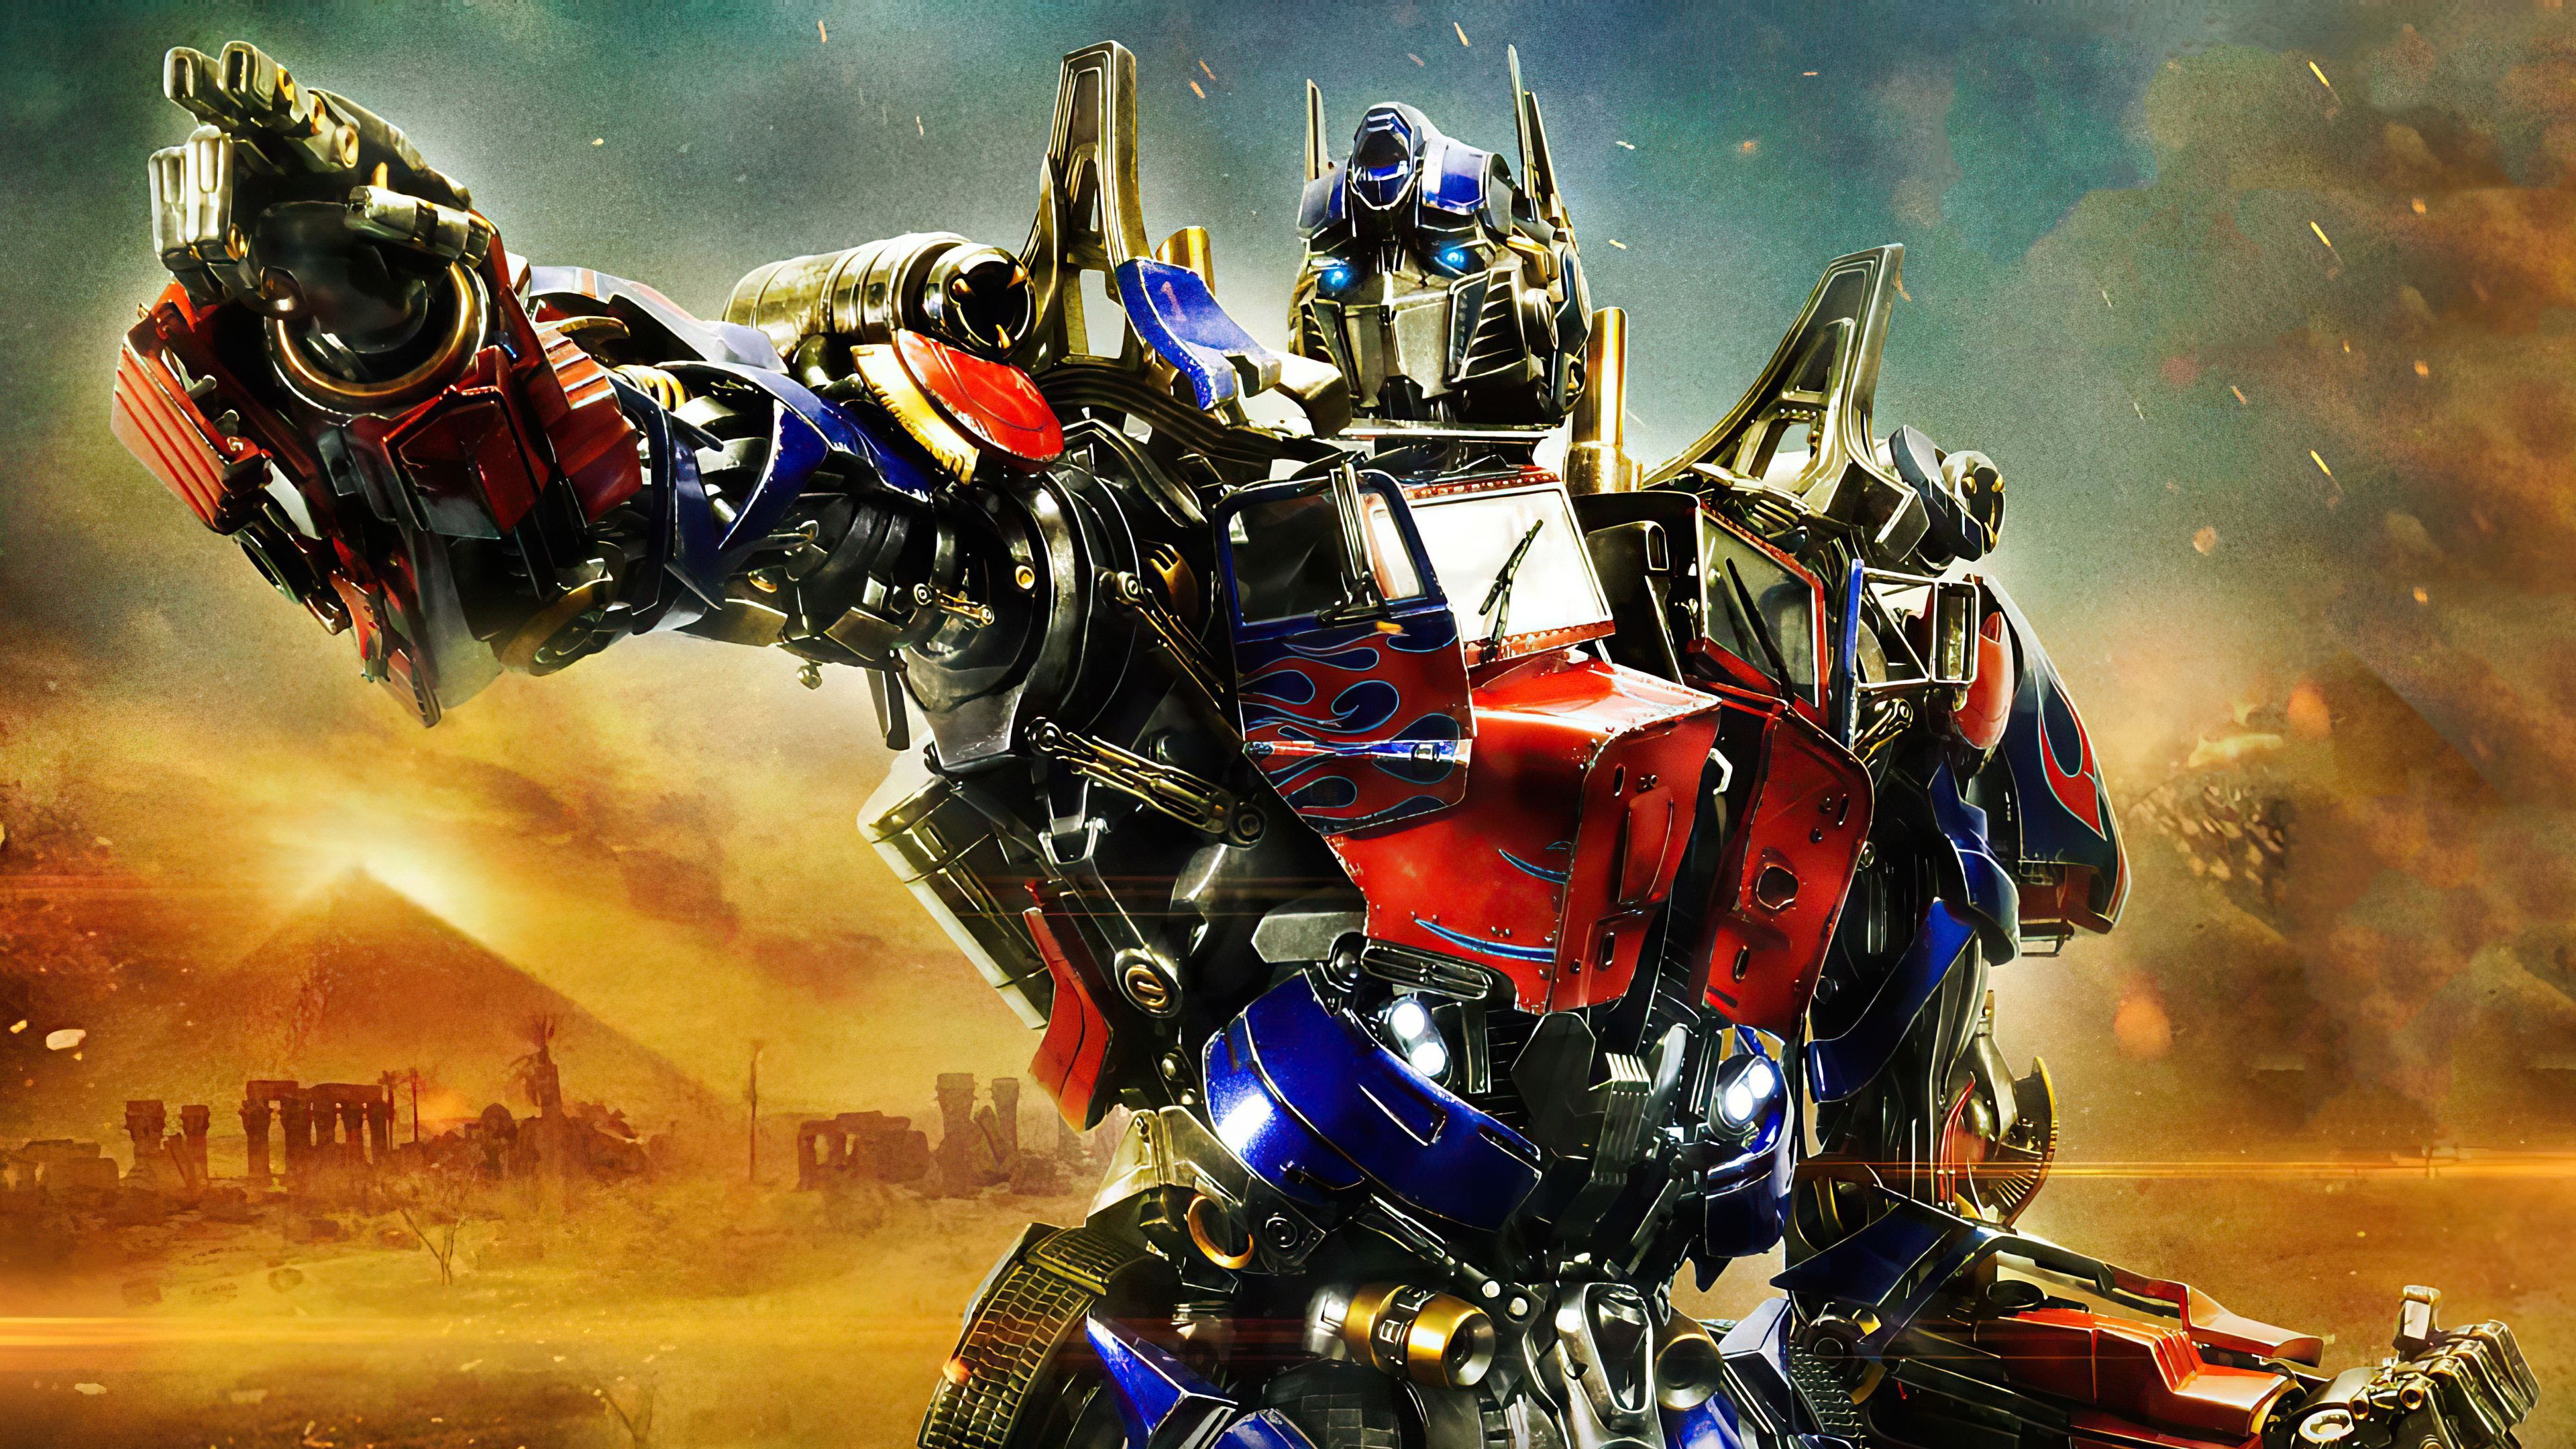  Transformers Hintergrundbild 3840x2160. Transformers 2020 4k, HD Superheroes, 4k Wallpaper, Image, Background, Photo and Picture